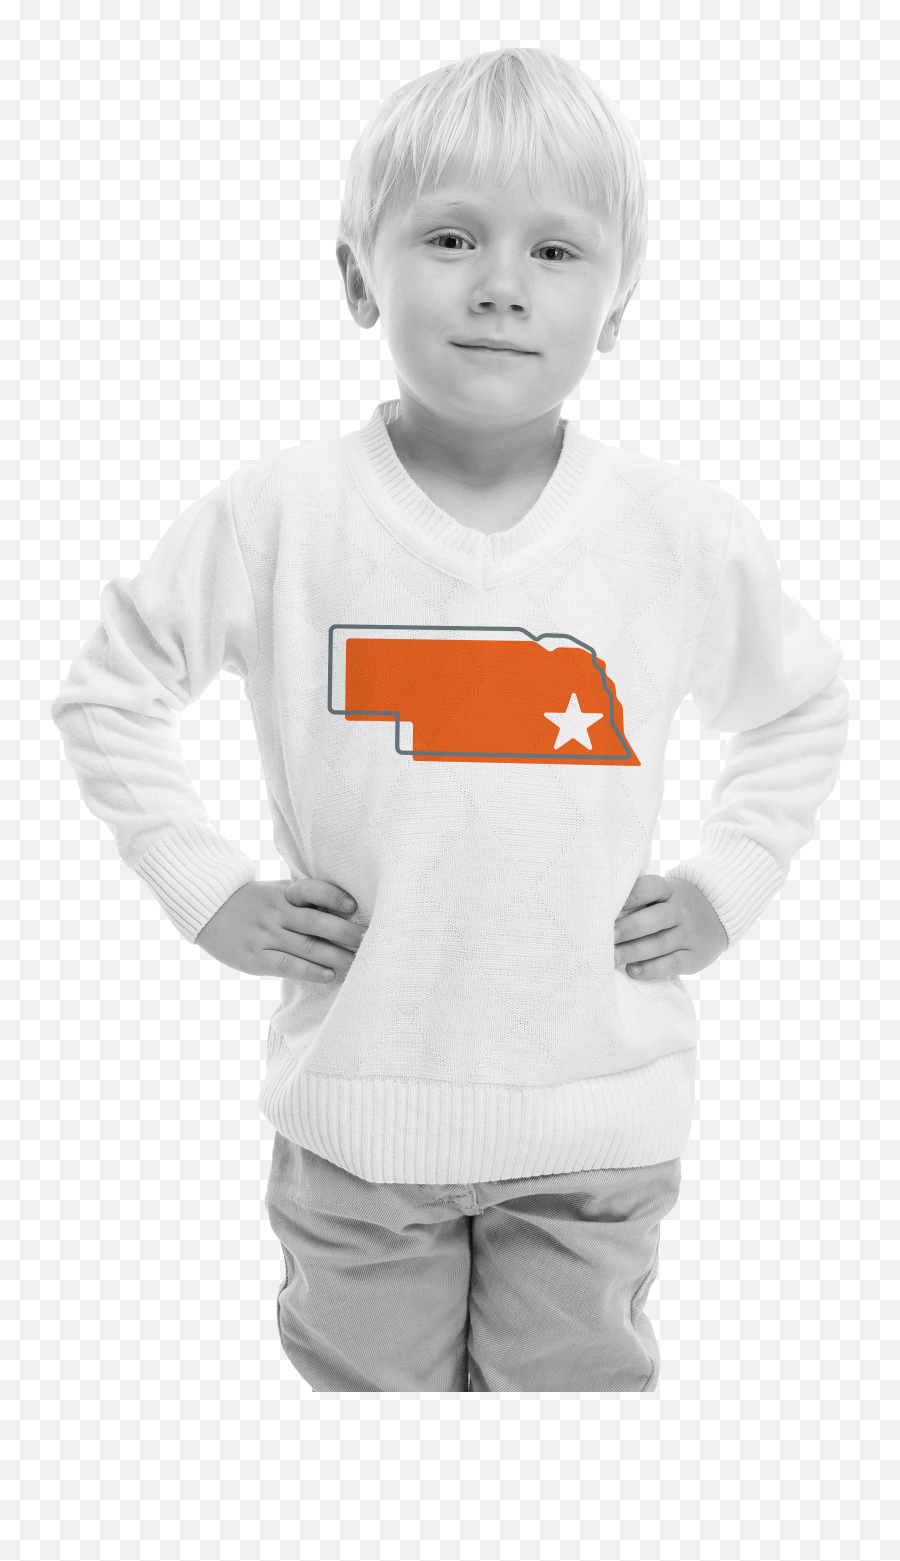 Nebraska - Alliance For Early Success Emoji,Nebraska Png